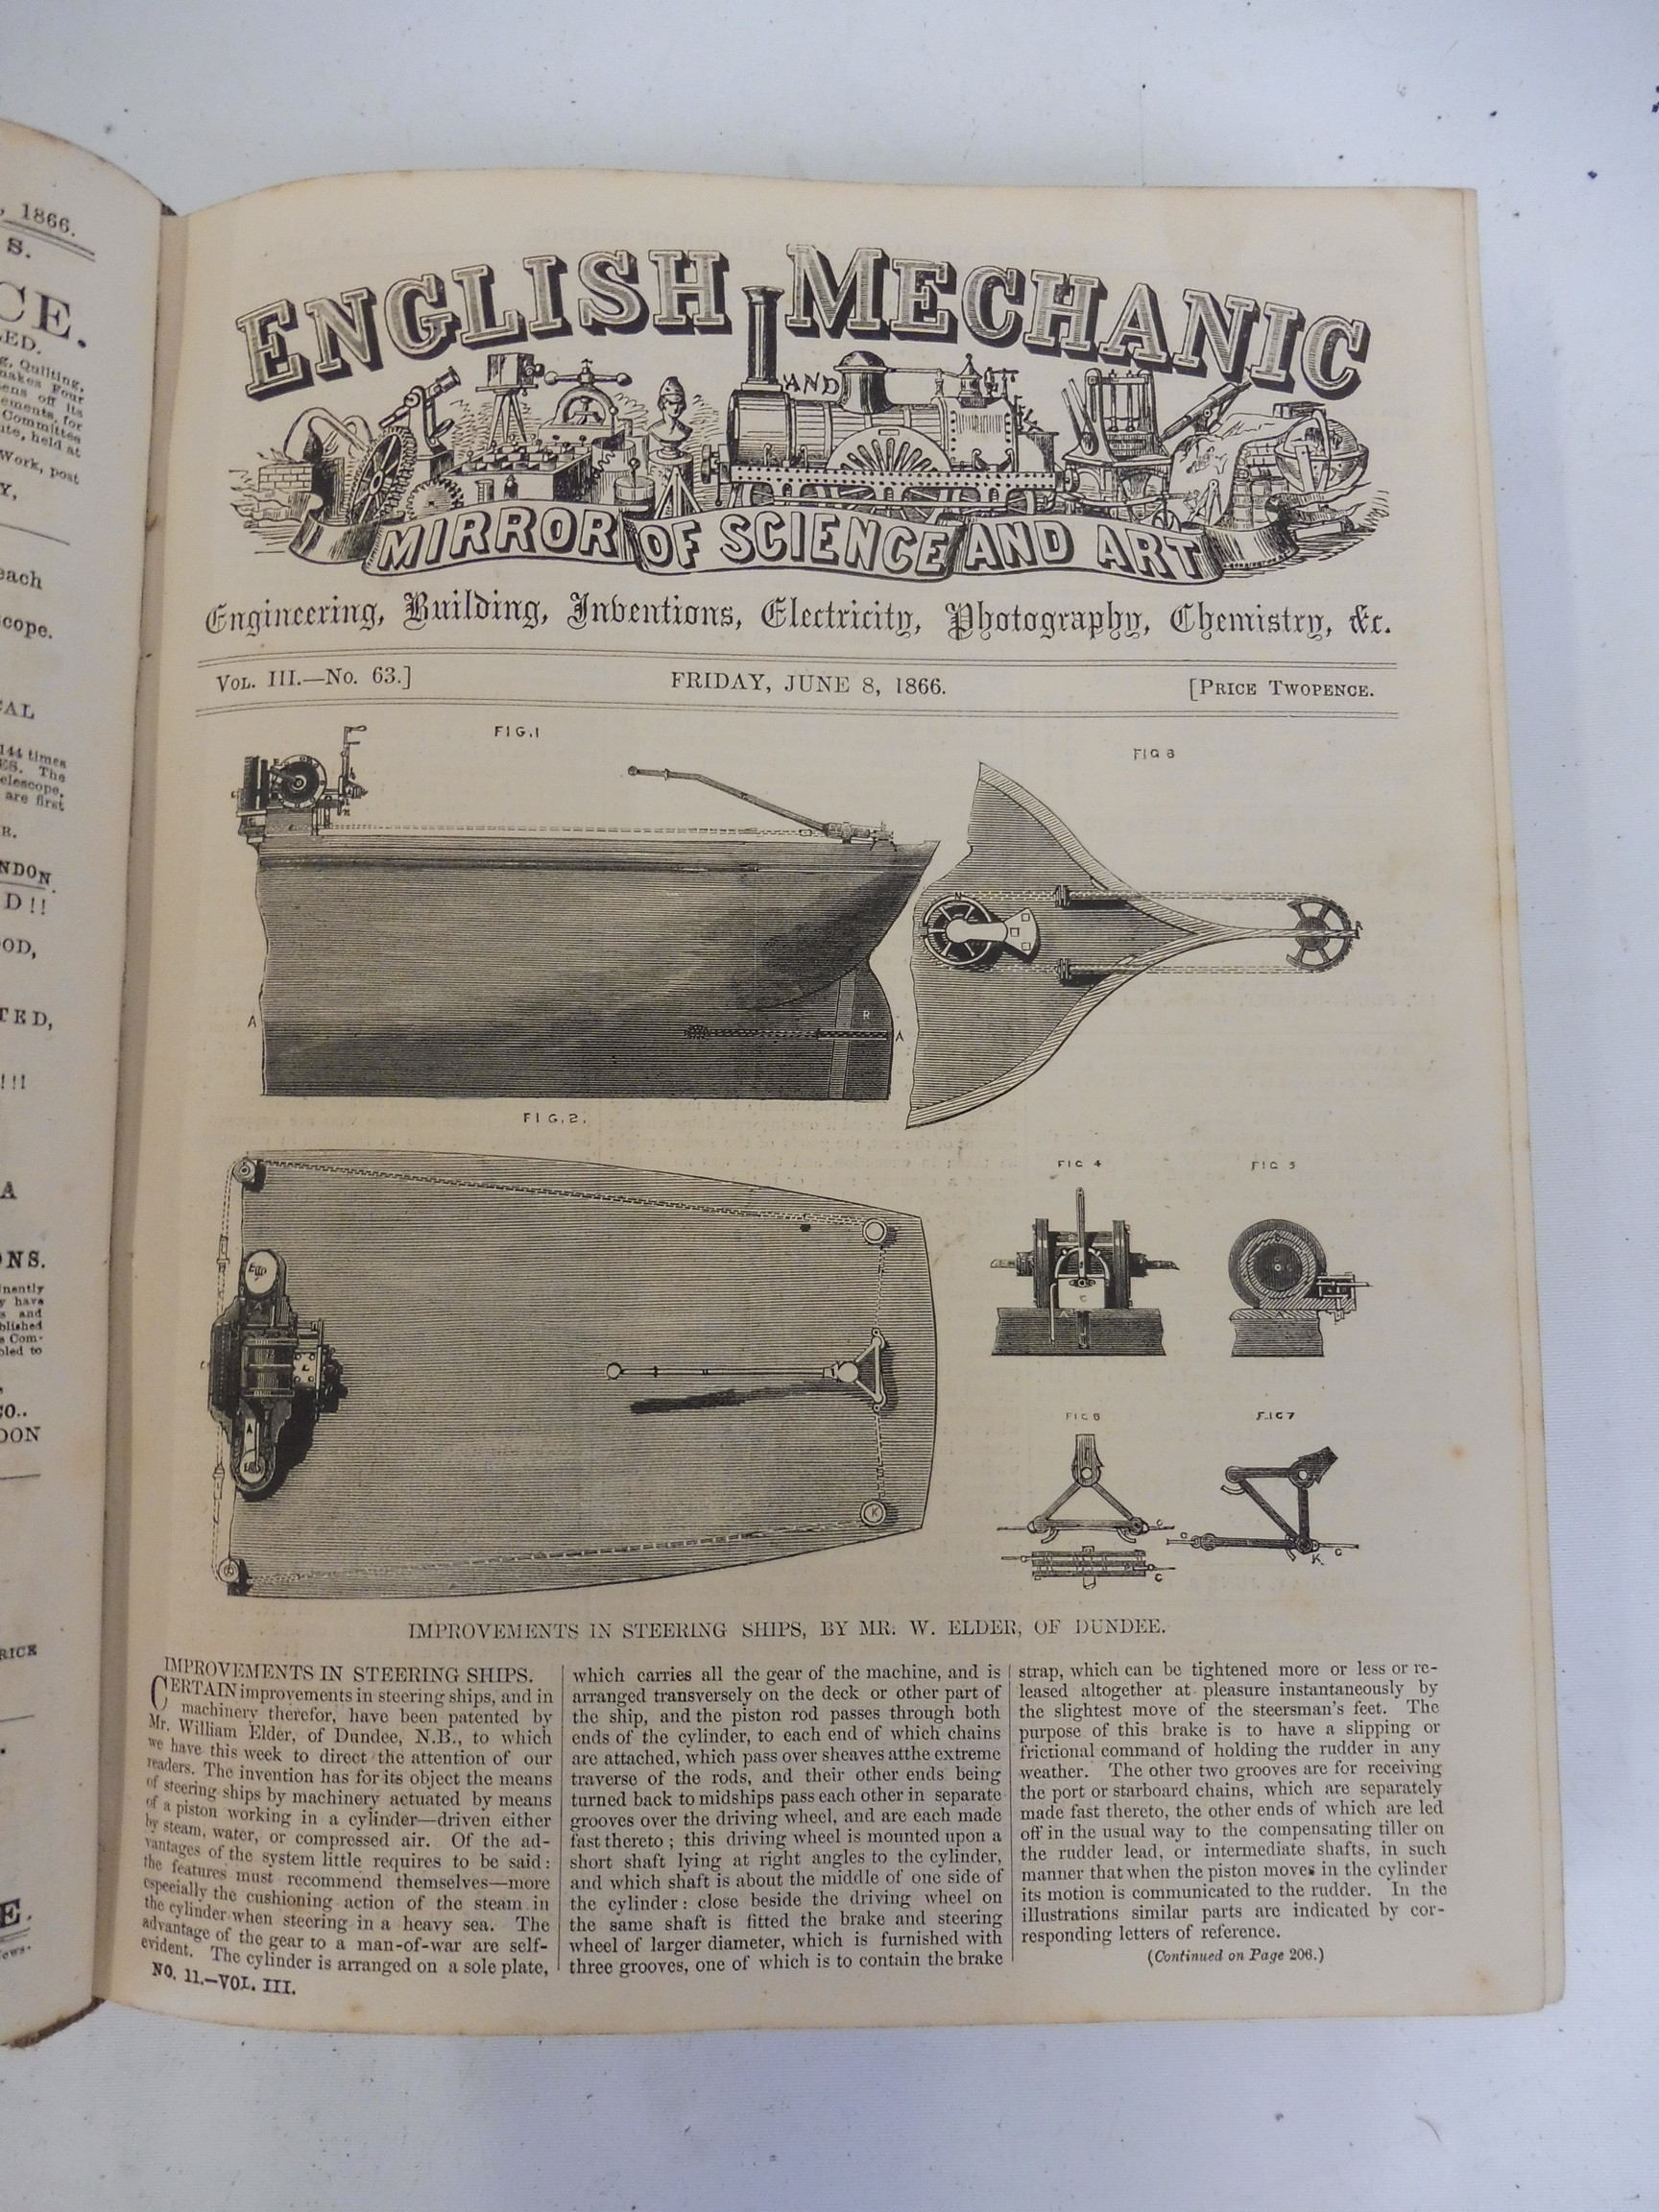 English Mechanic 1866-67, single volume. - Image 4 of 5